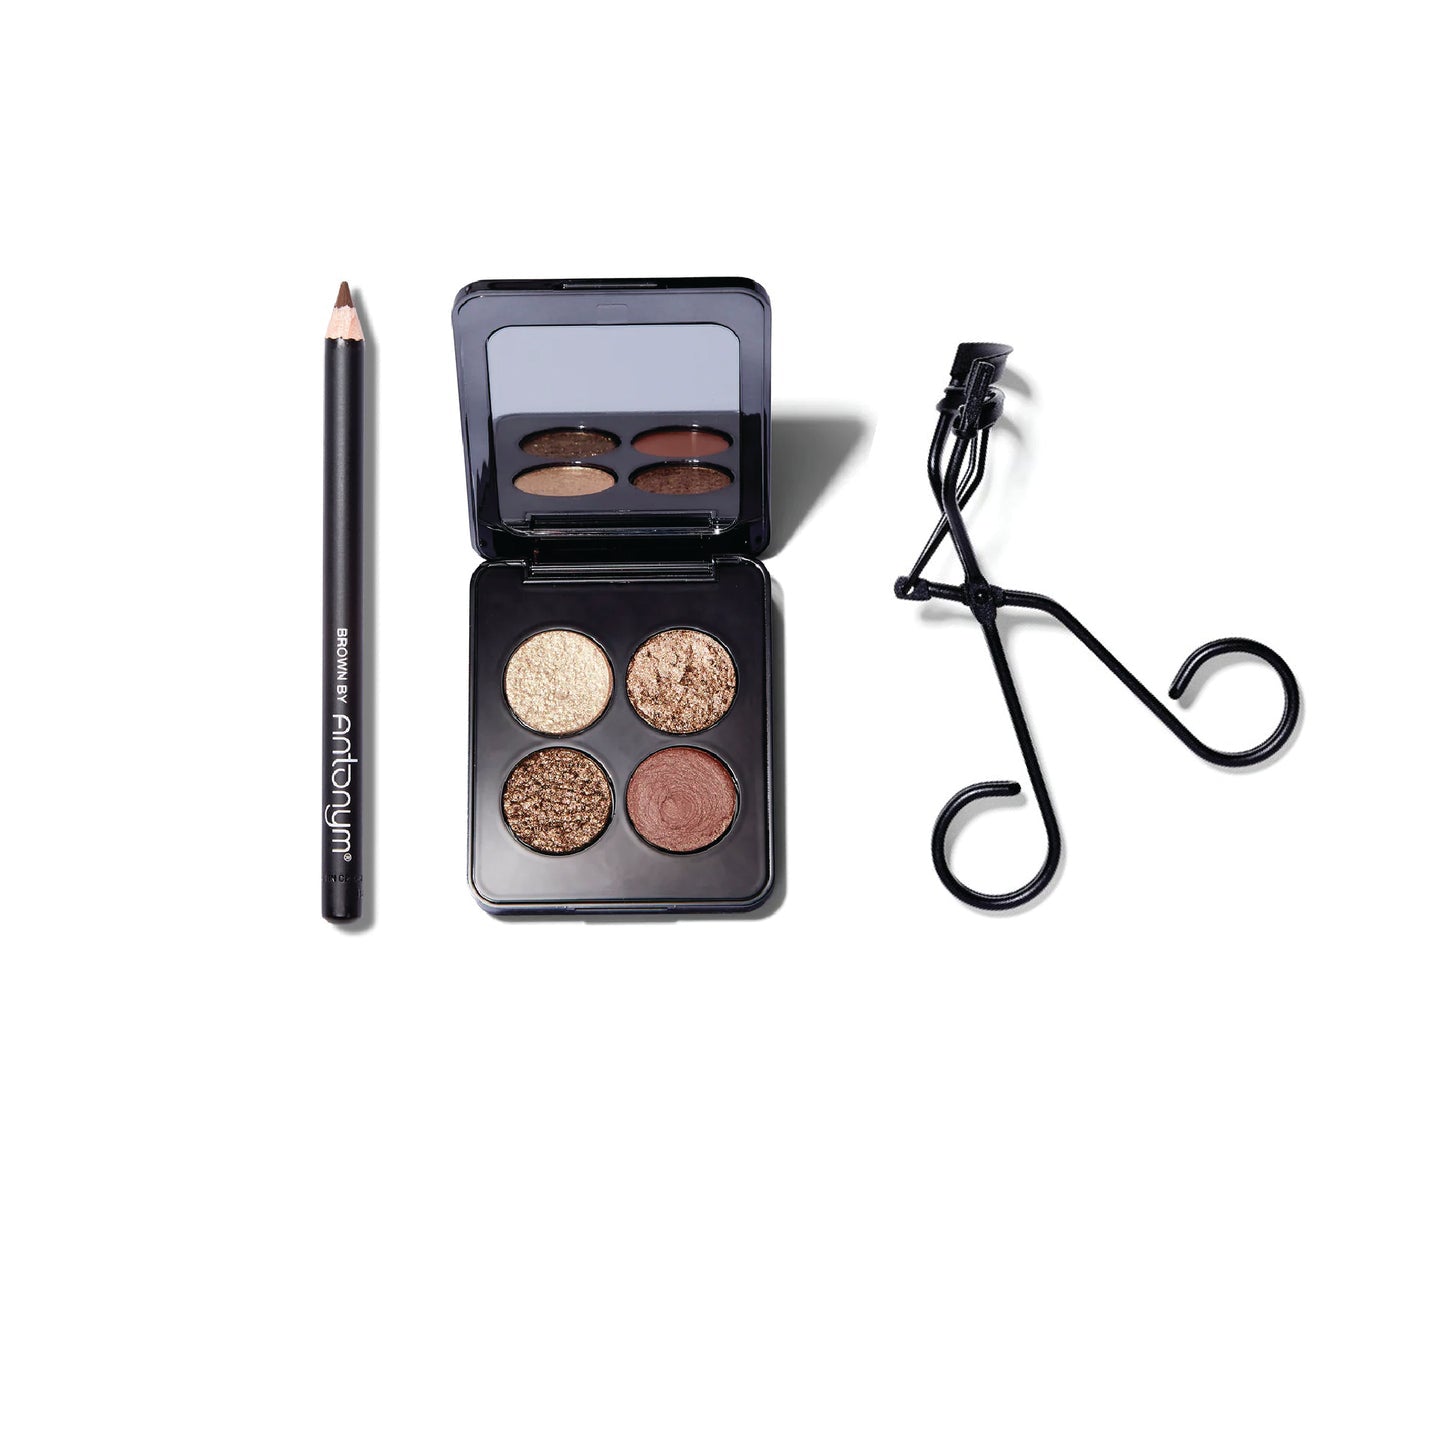 The Antonym brown eyeliner pencil, the ROEN eyeshadow quad with metallic gold and bronze shades, and the matte black metal Surratt Relevee eyelash curler.